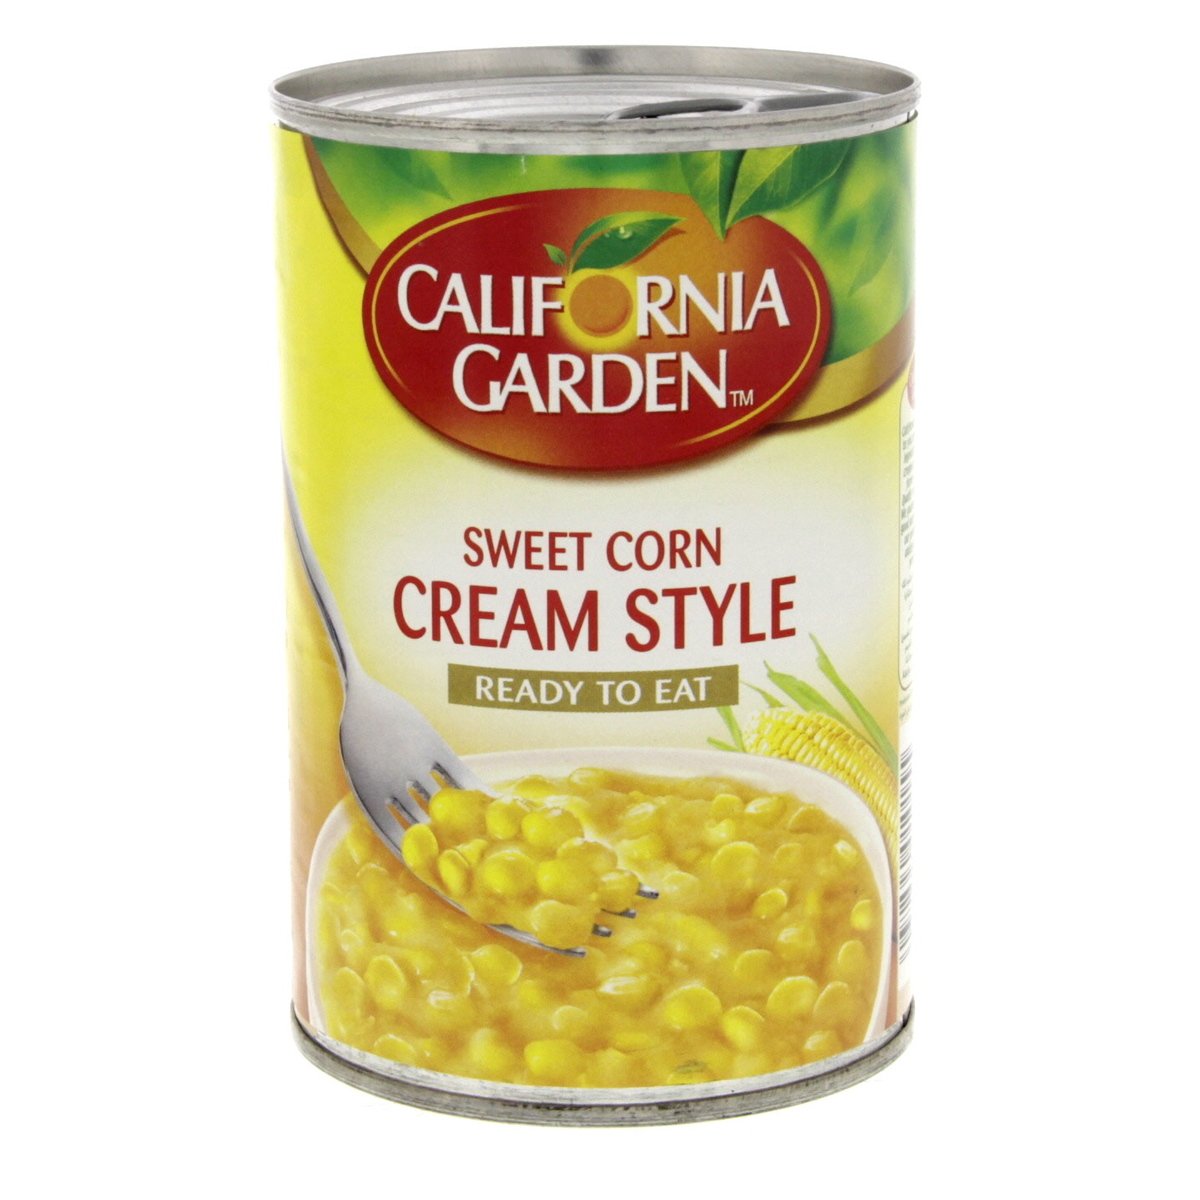 California Garden Canned Creamed Sweet Corn Cream Style 418g